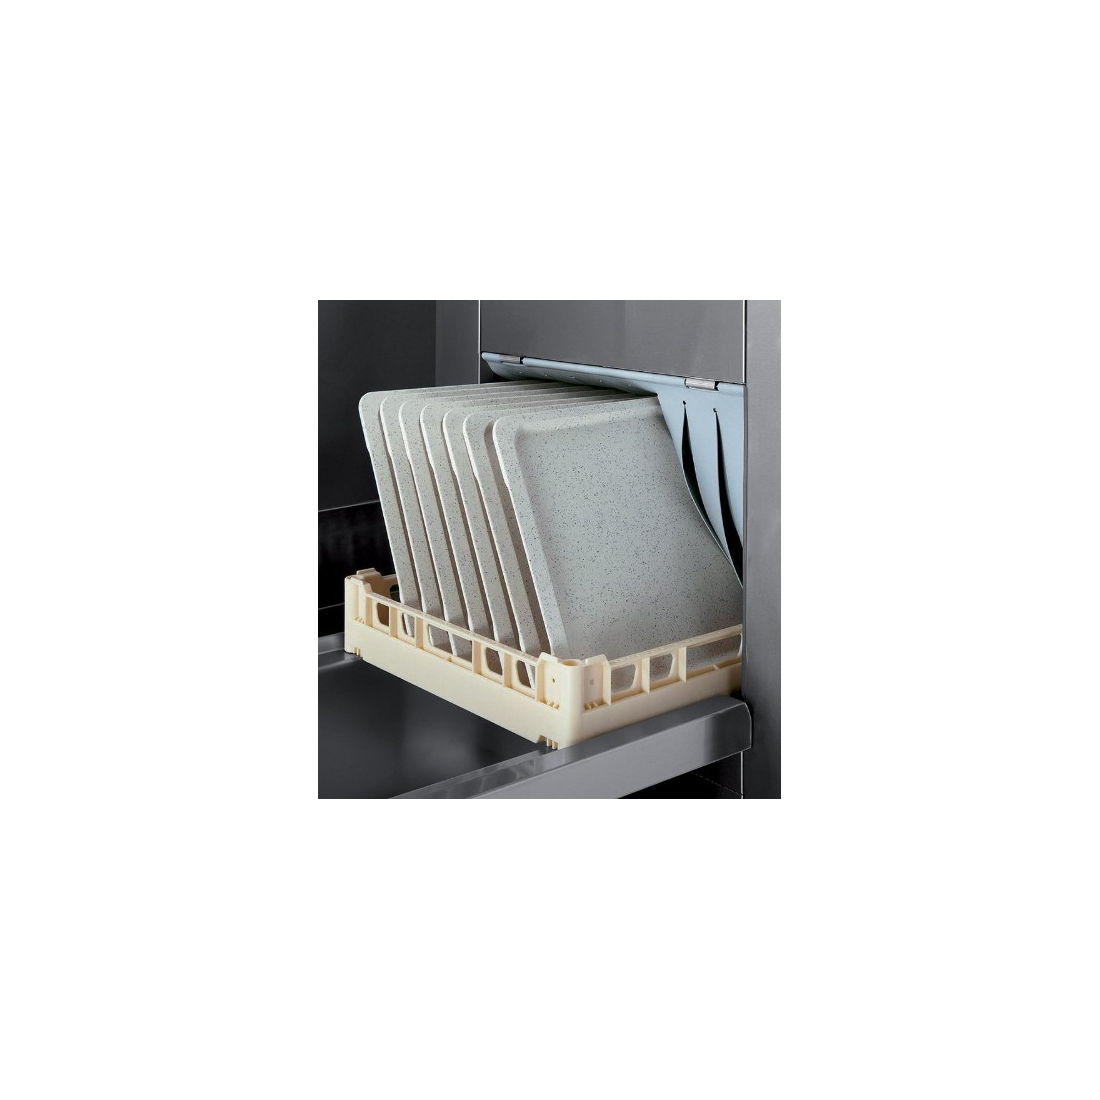 SISTEMA PROJECT (CT120HZ) Rack Conveyor Dishwasher With Dryer|mkayn|مكاين